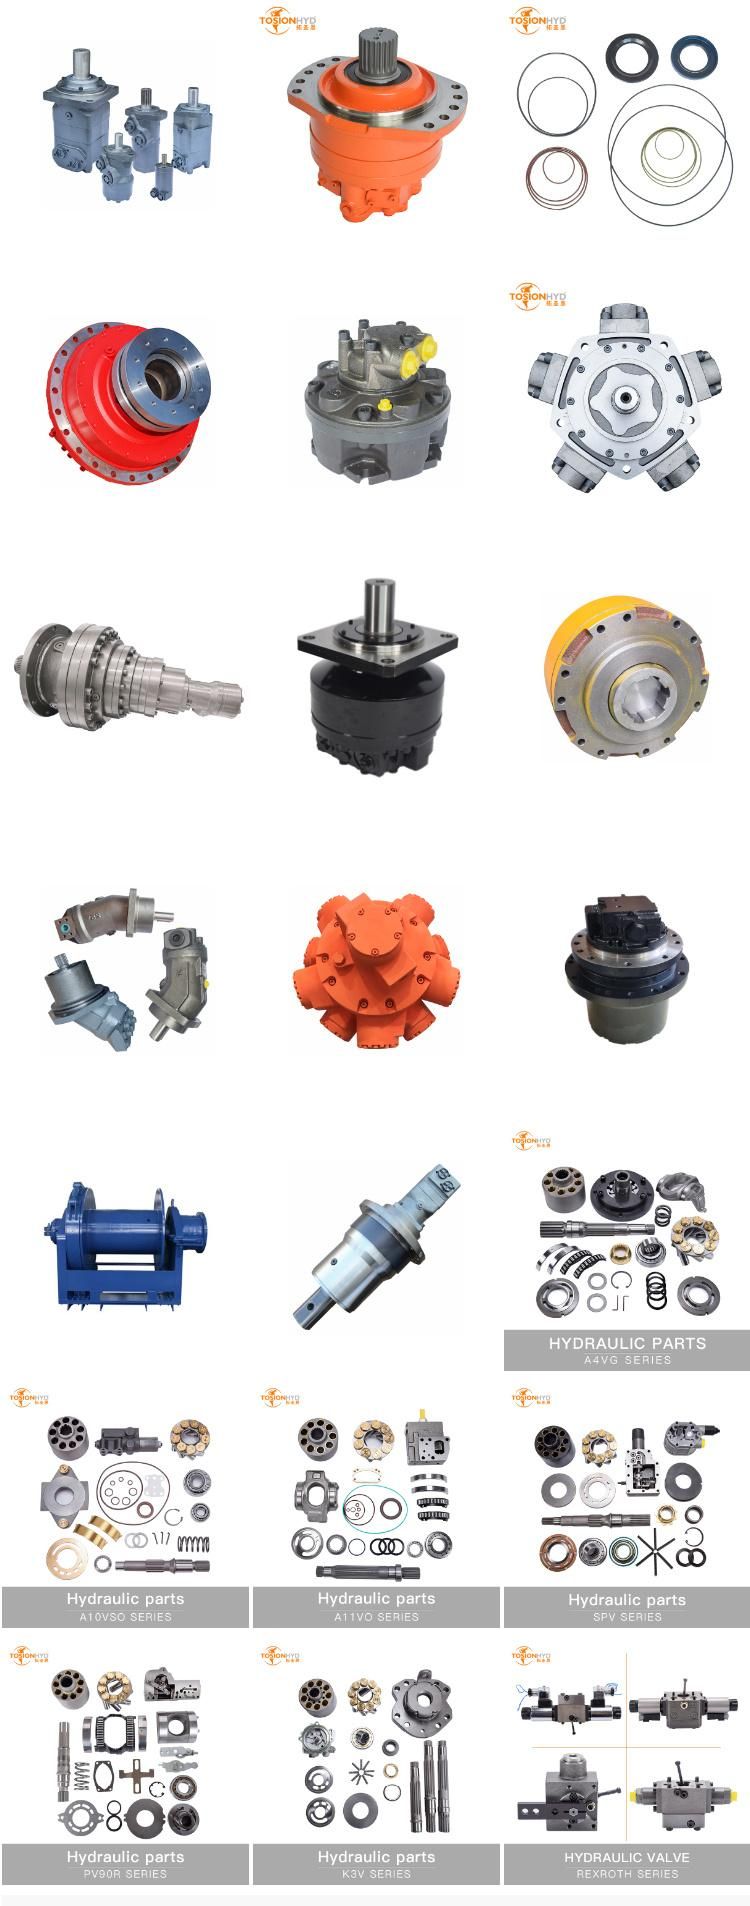 A6vm 355 Hydraulic Pump Parts with Rexroth Spare Repair Kits